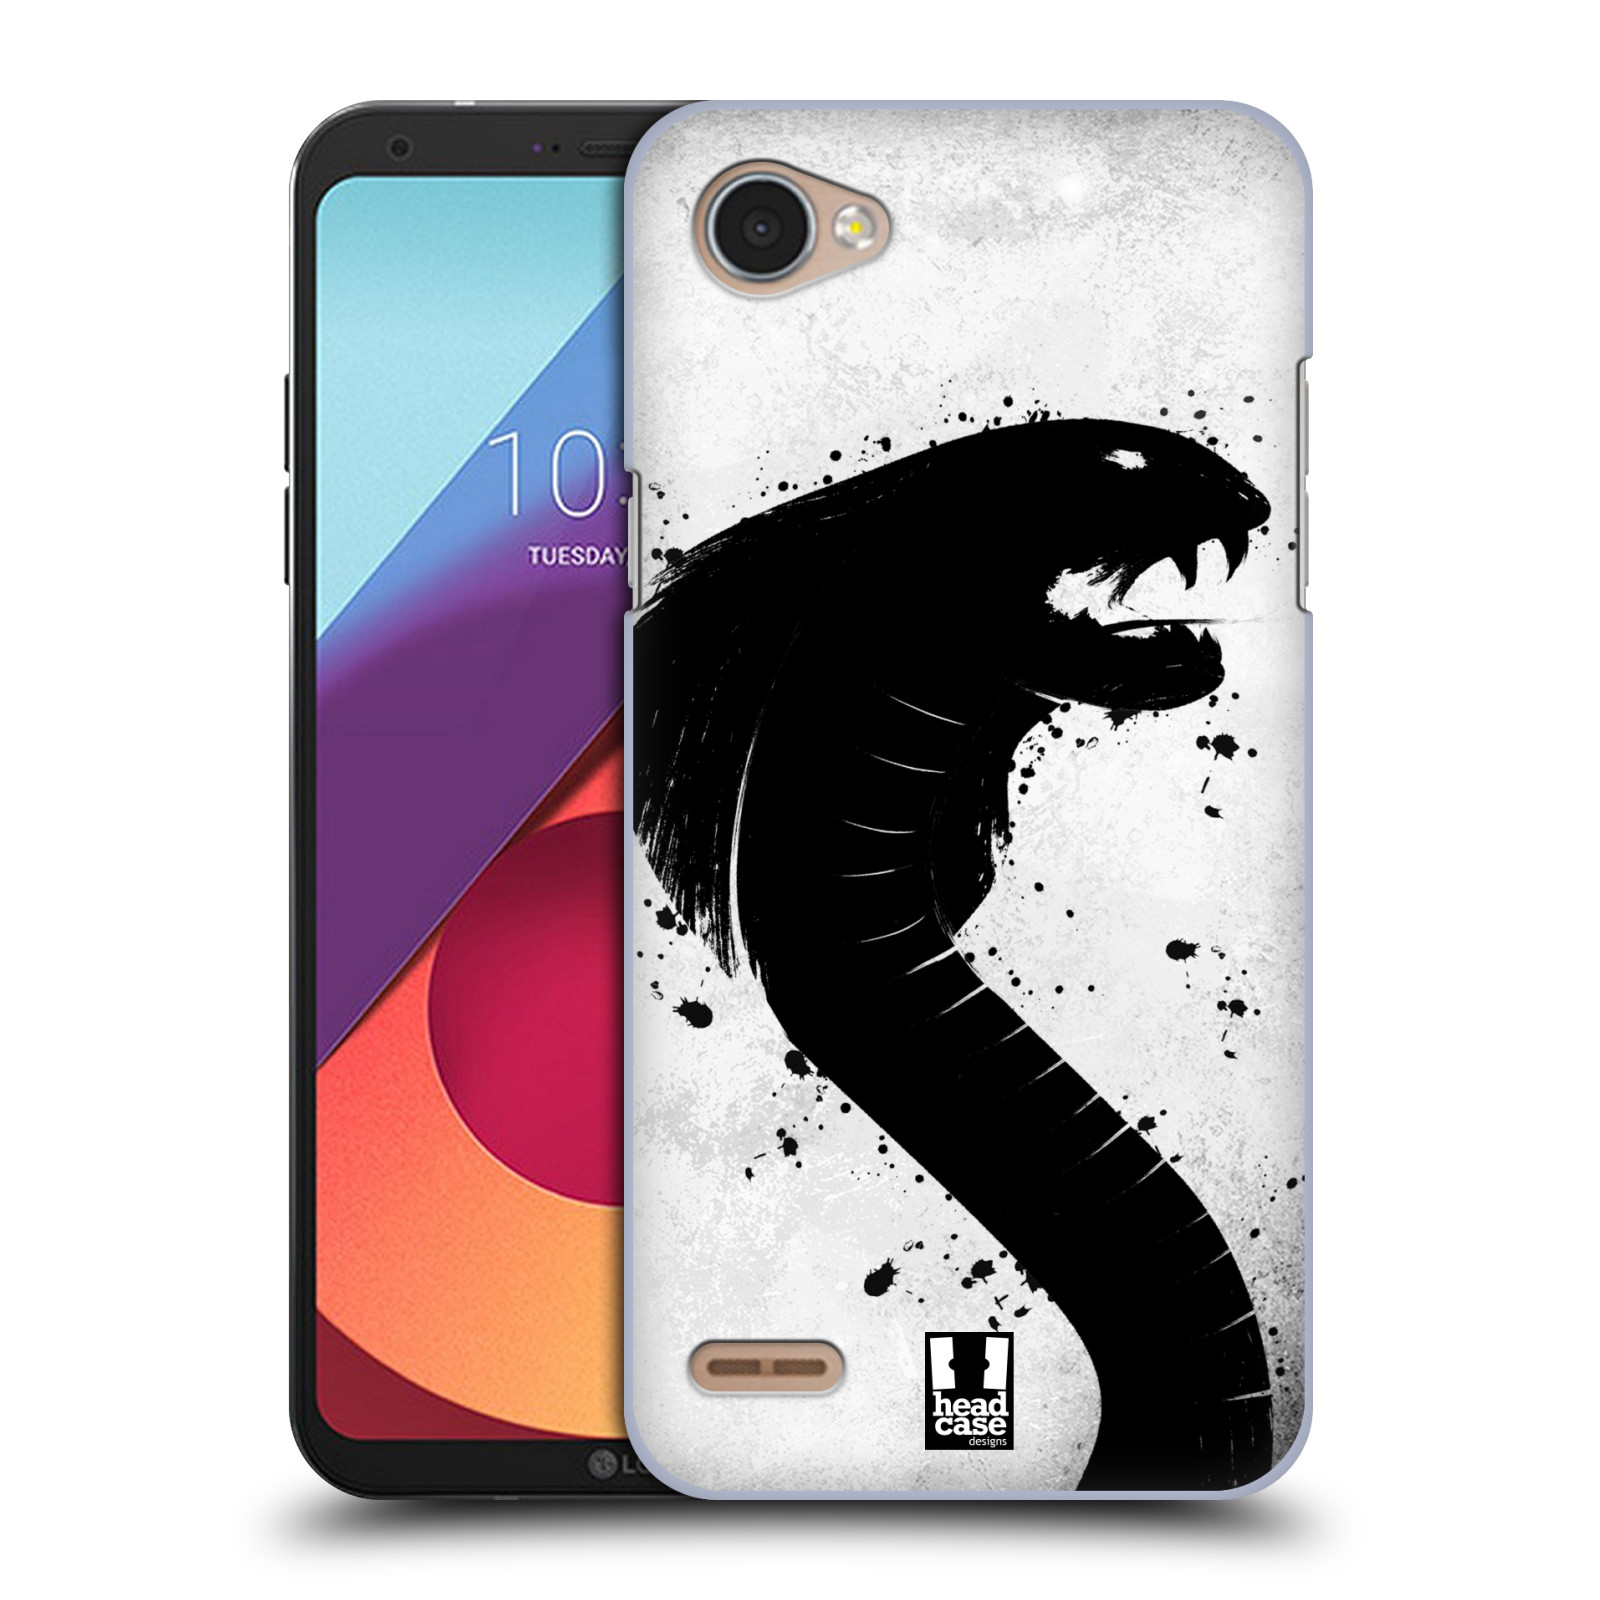 HEAD CASE plastový obal na mobil LG Q6 / Q6 PLUS vzor Kresba tuš zvíře had kobra